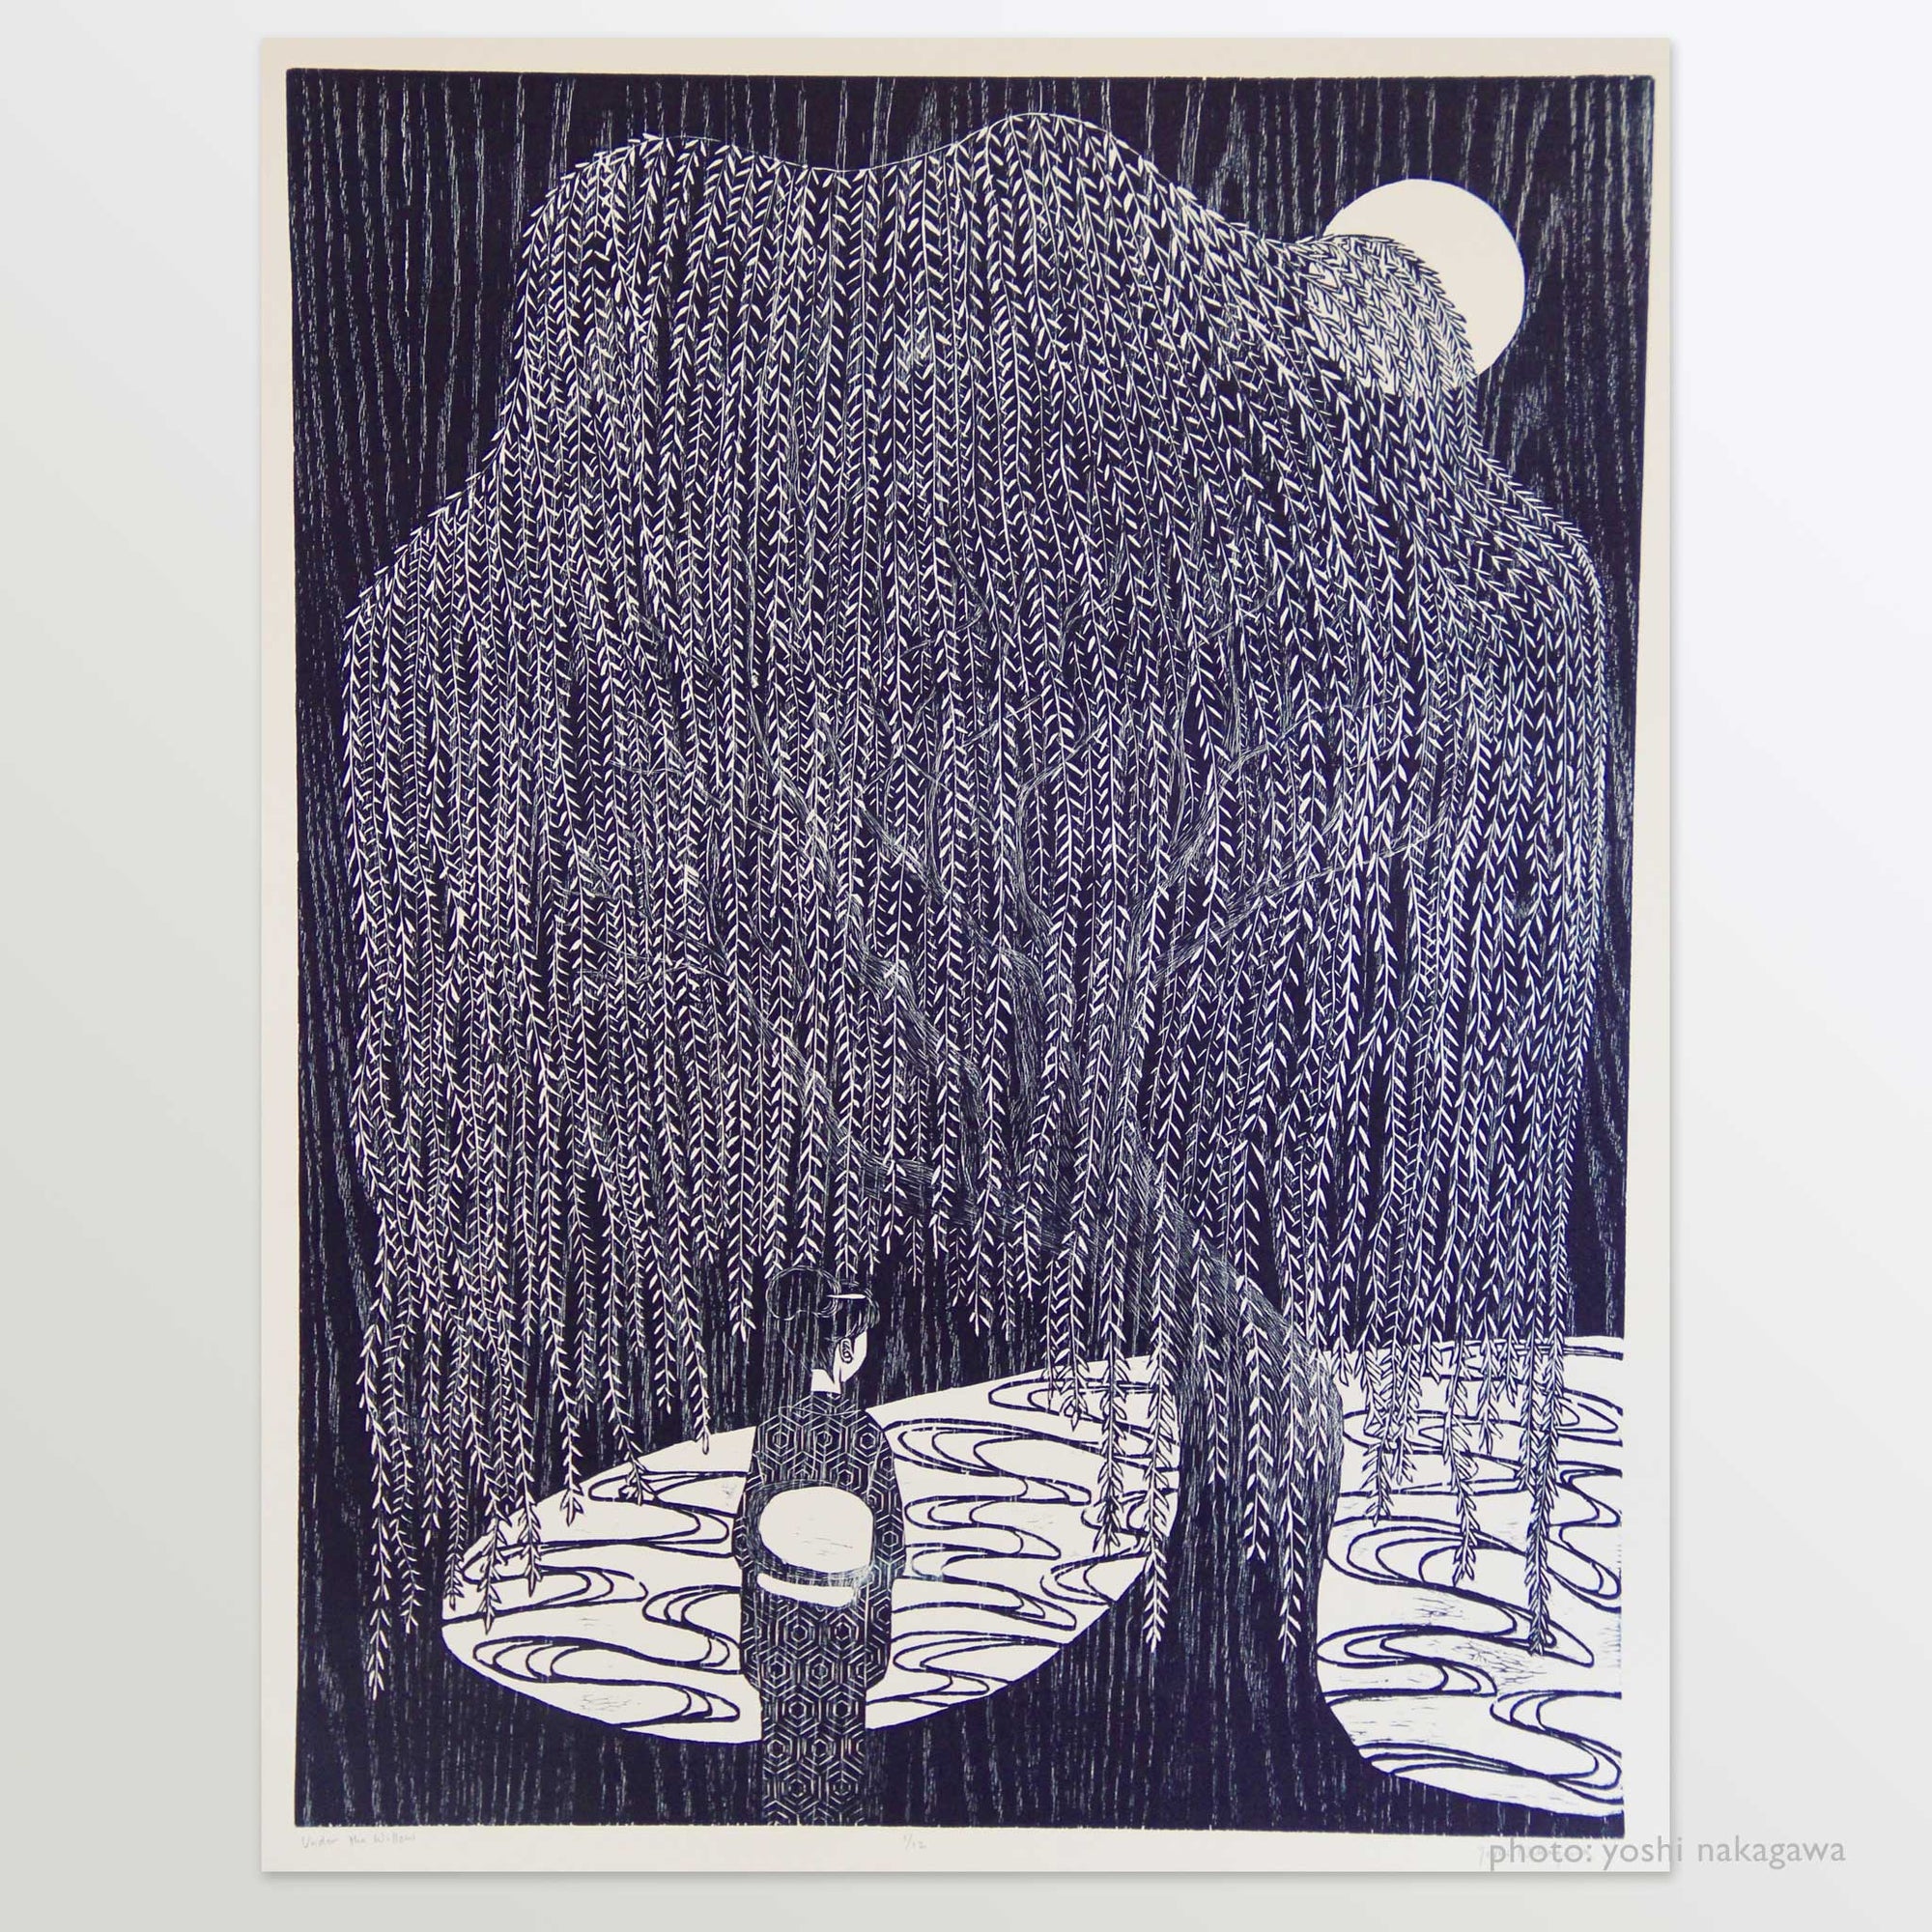 "Under the Willow" 44 x 30 Woodcut by Yoshi Nakagawa